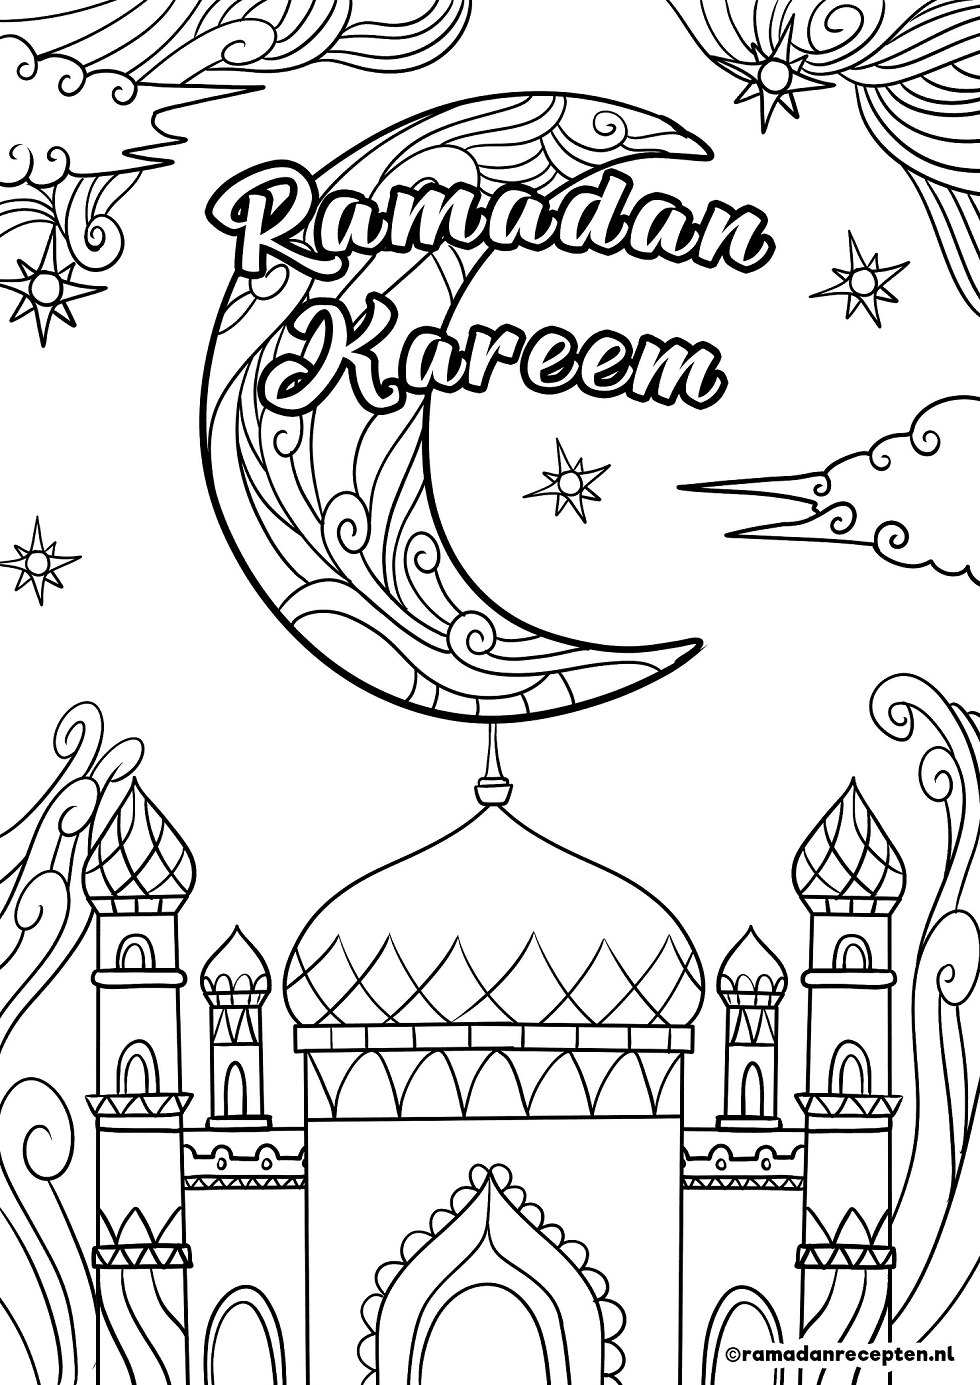 Página para colorir grátis Ramadan Kareem